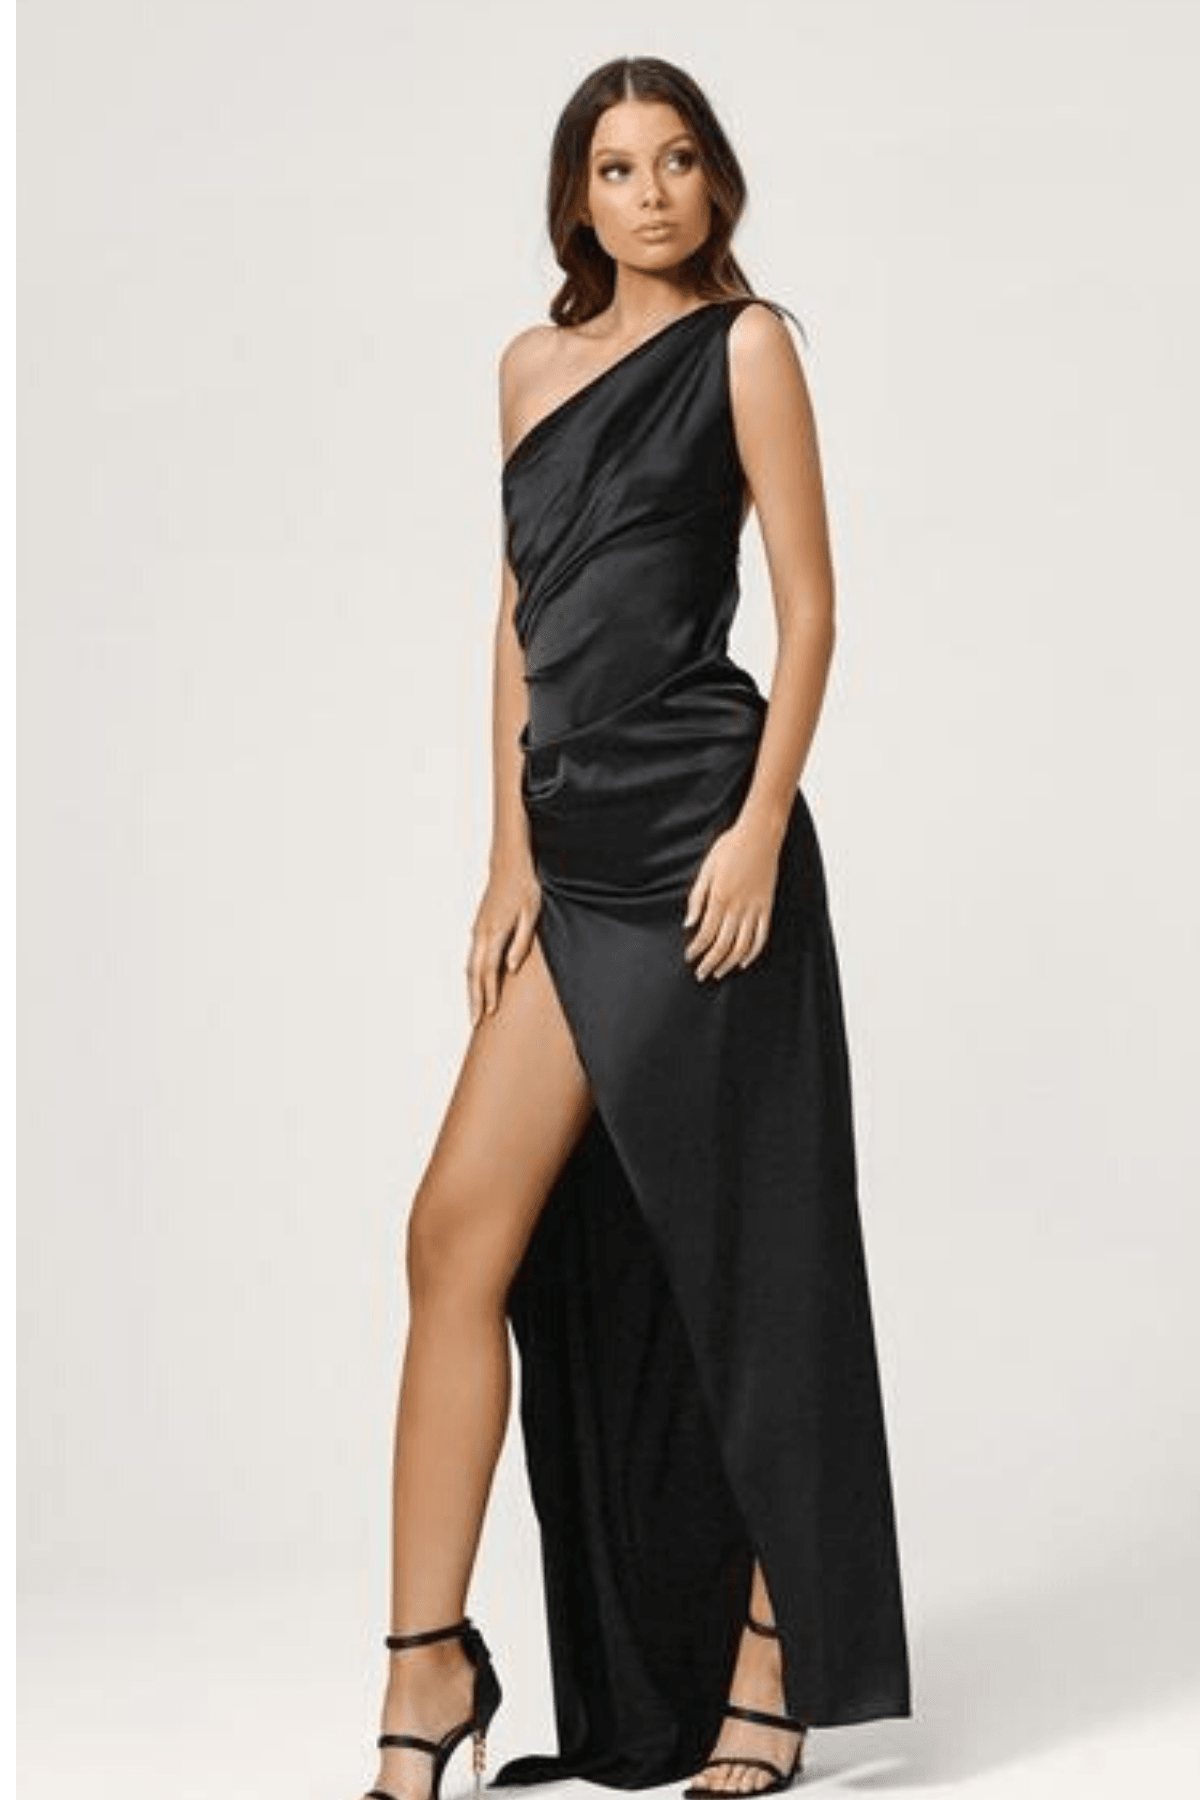 Lexi LEXI Samira Dress (Black) - RRP $379 - lexi-samira-dress-black---rrp-9-dress-for-a-night-30754862.png